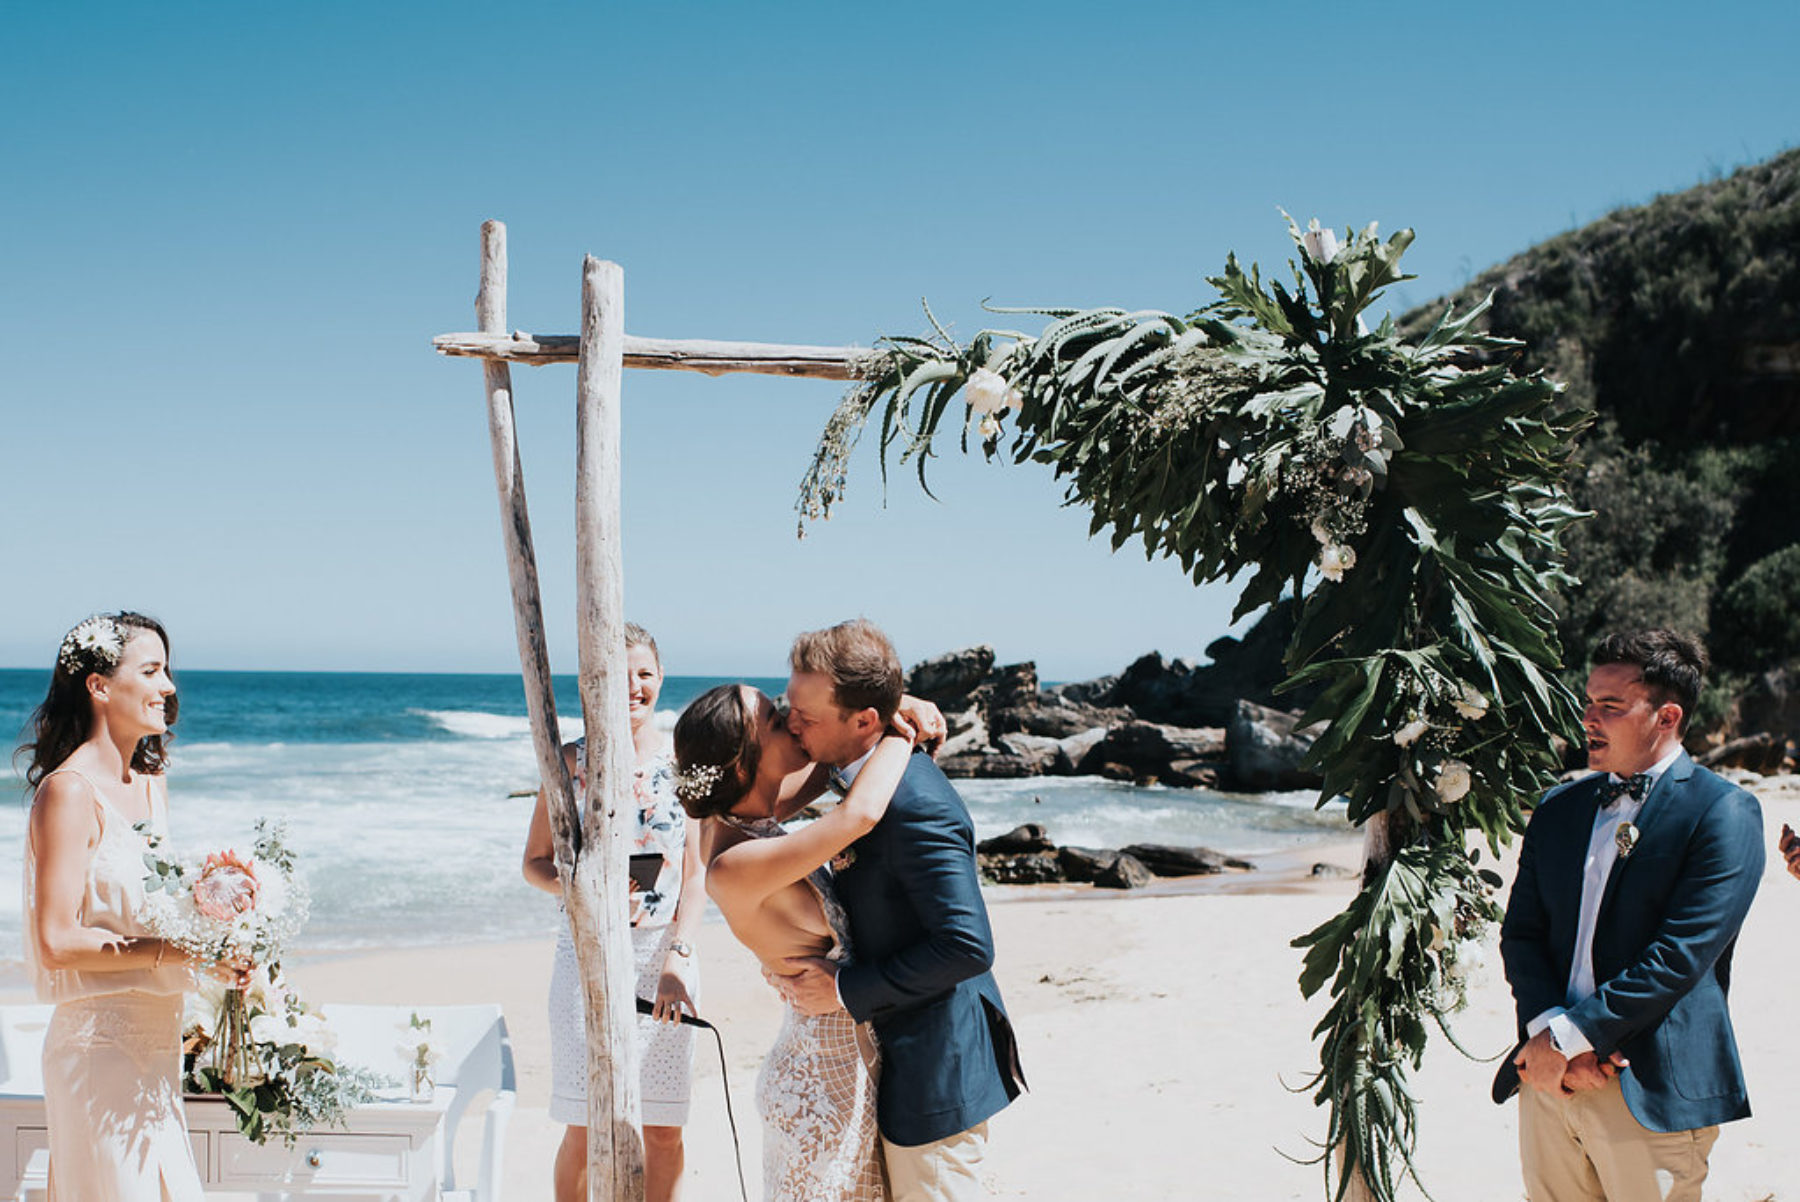 Top Tips for Planning a Beach Wedding - Great Destination Weddings